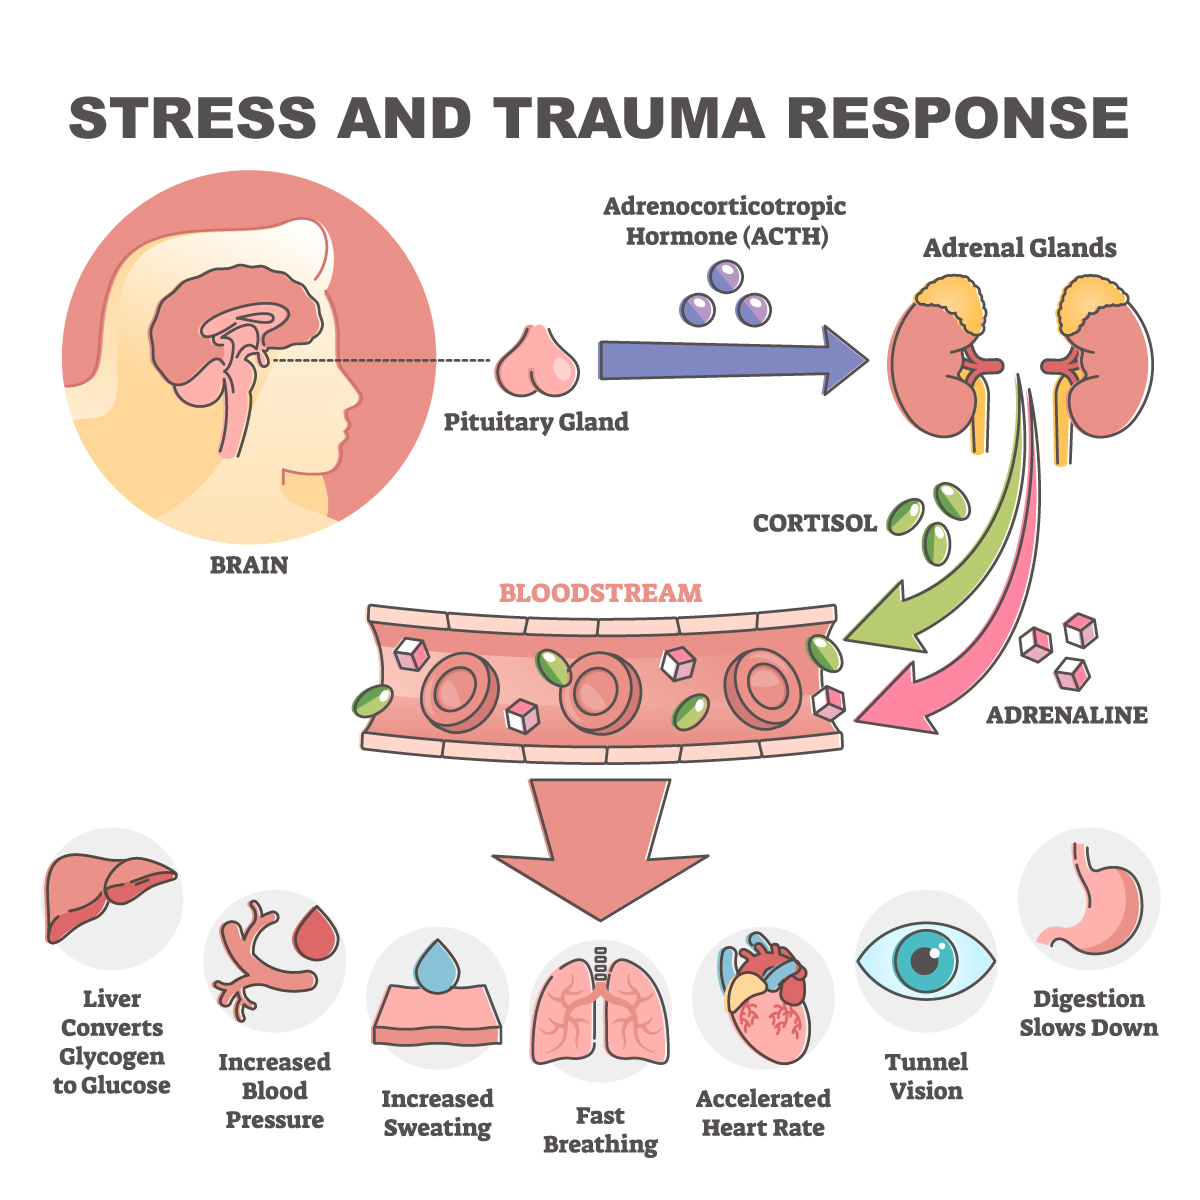 STRESS AND TRAUMA RESPONSE